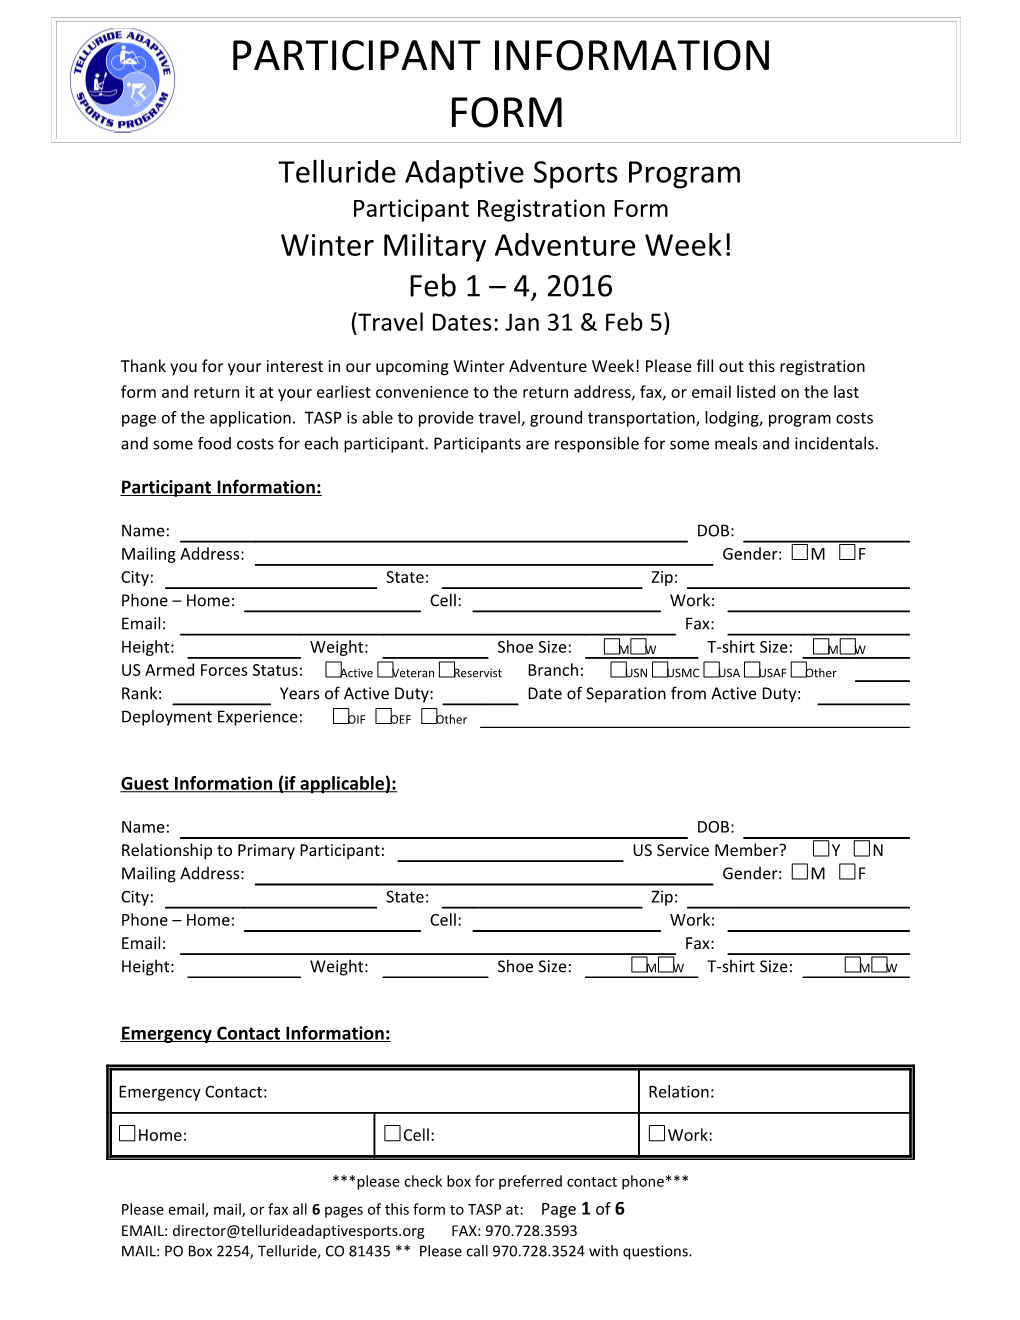 Telluride Adaptive Sports Program